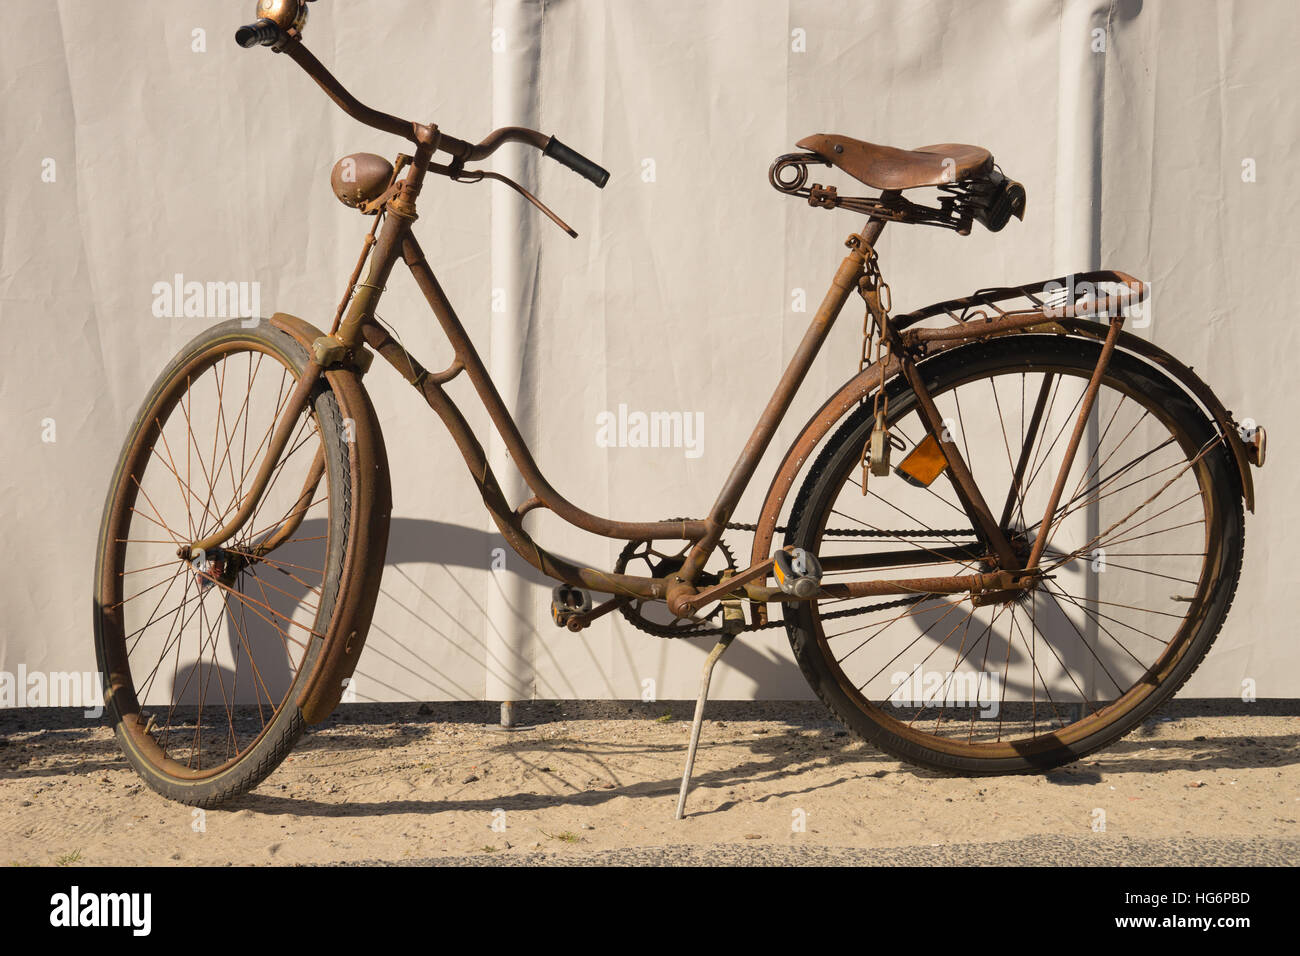 Vecchia bici arrugginita Foto stock - Alamy